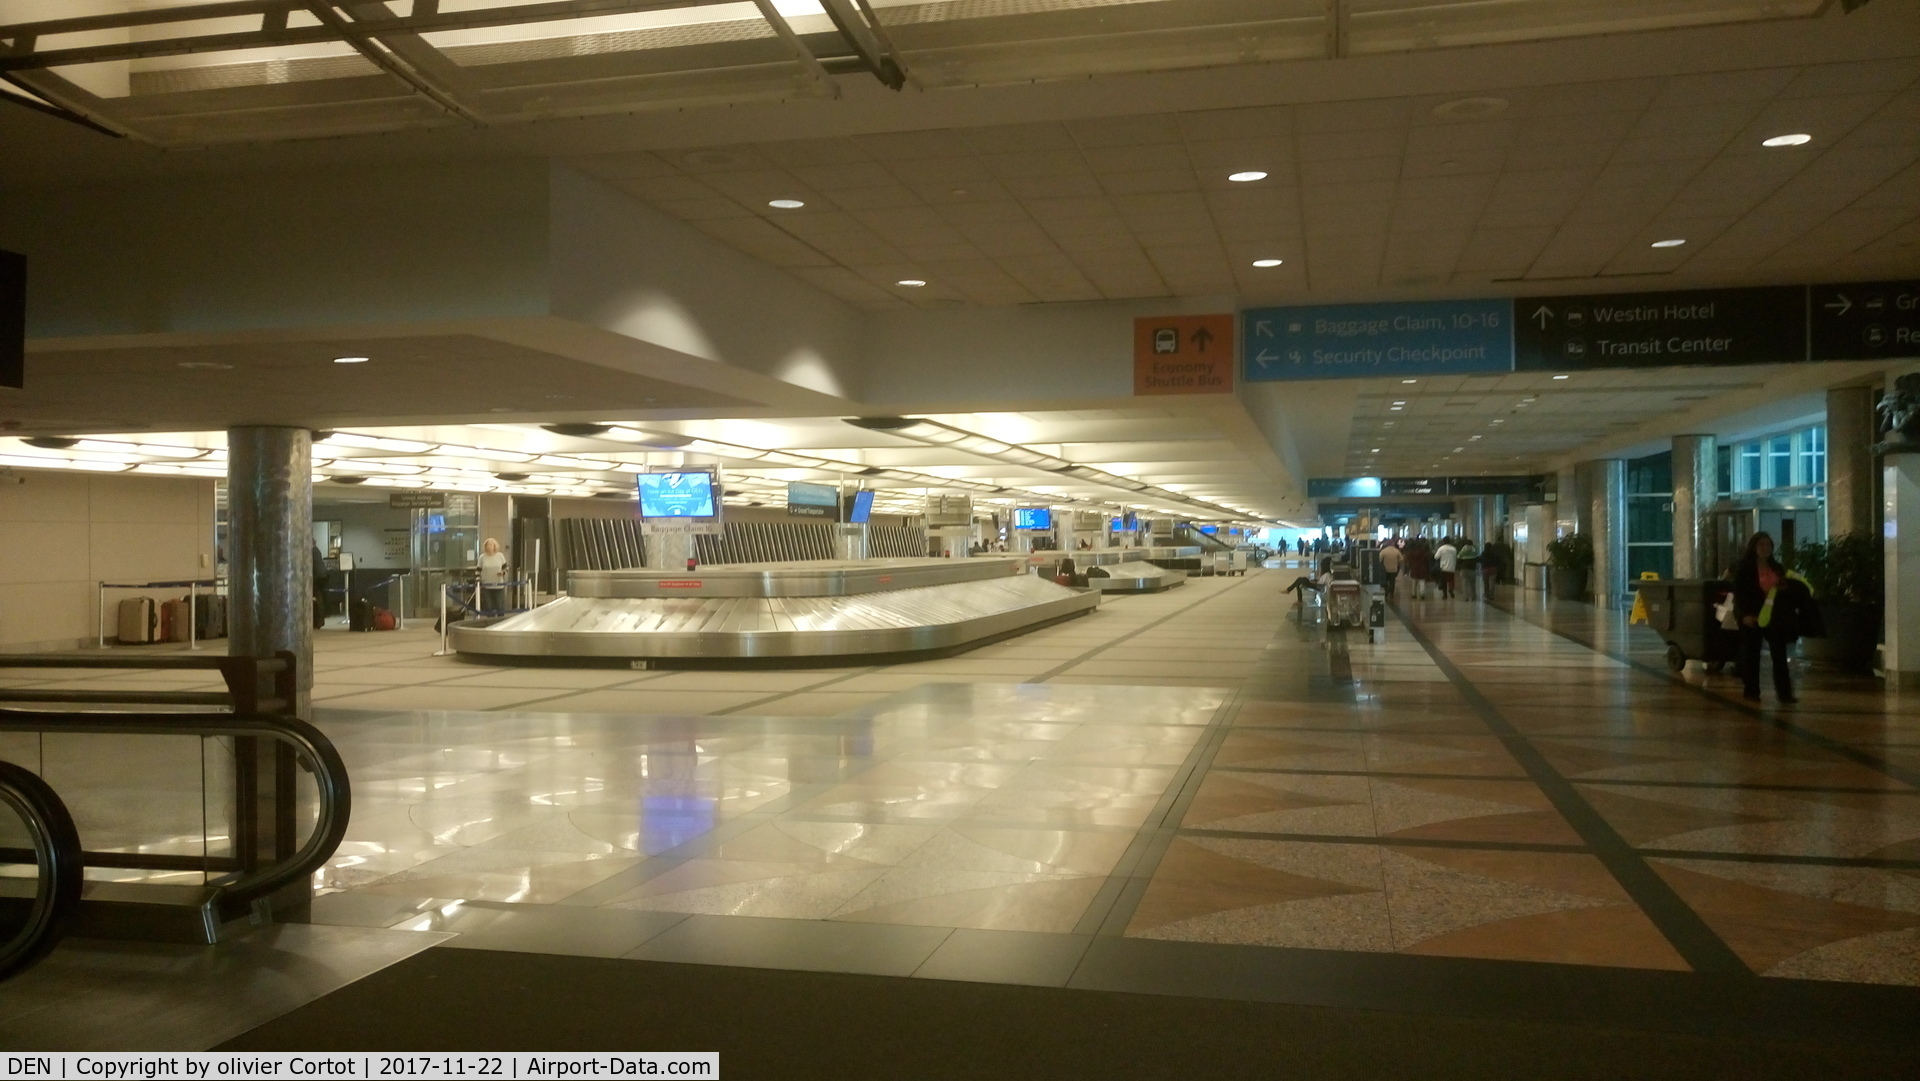 Denver International Airport (DEN) - On my way home